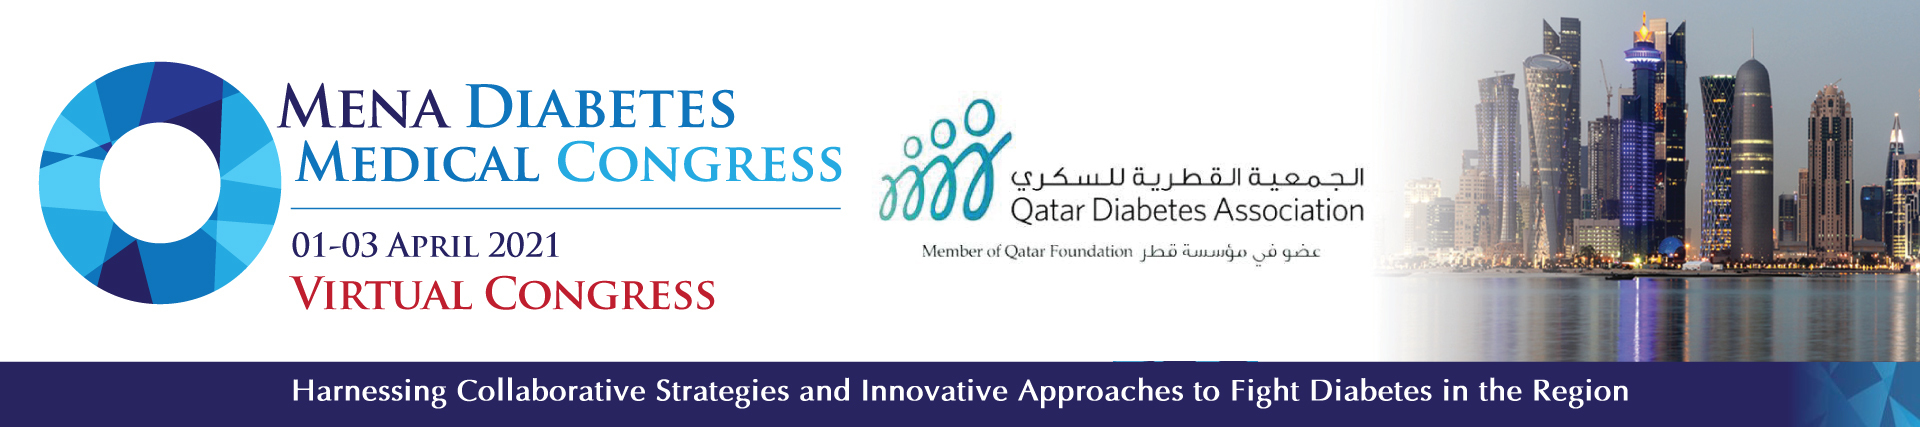 MENA Diabetes Medical Congress, Virtual, United Arab Emirates